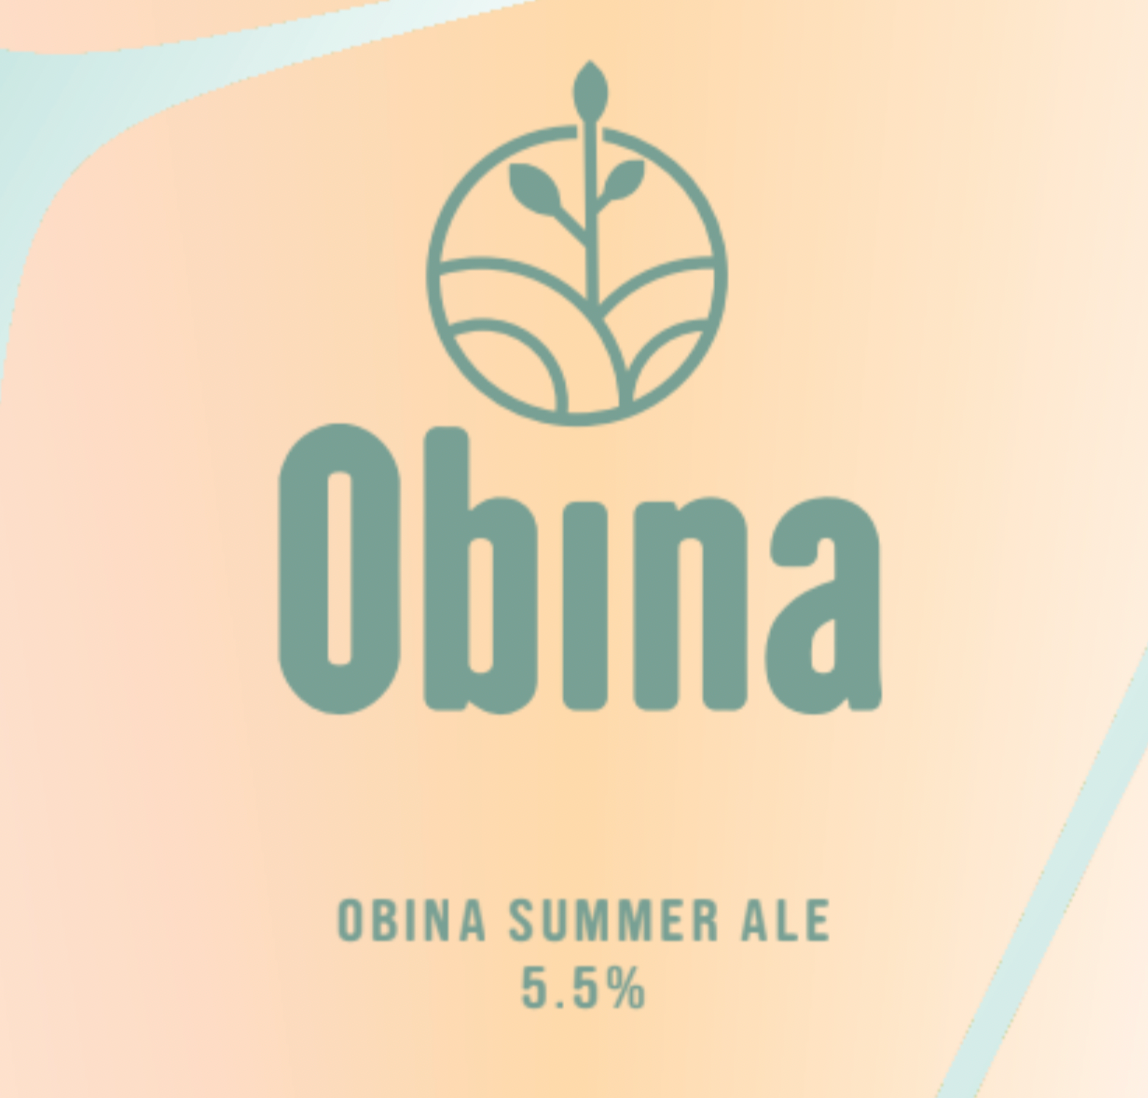 Obina Summer Ale - 1 Can